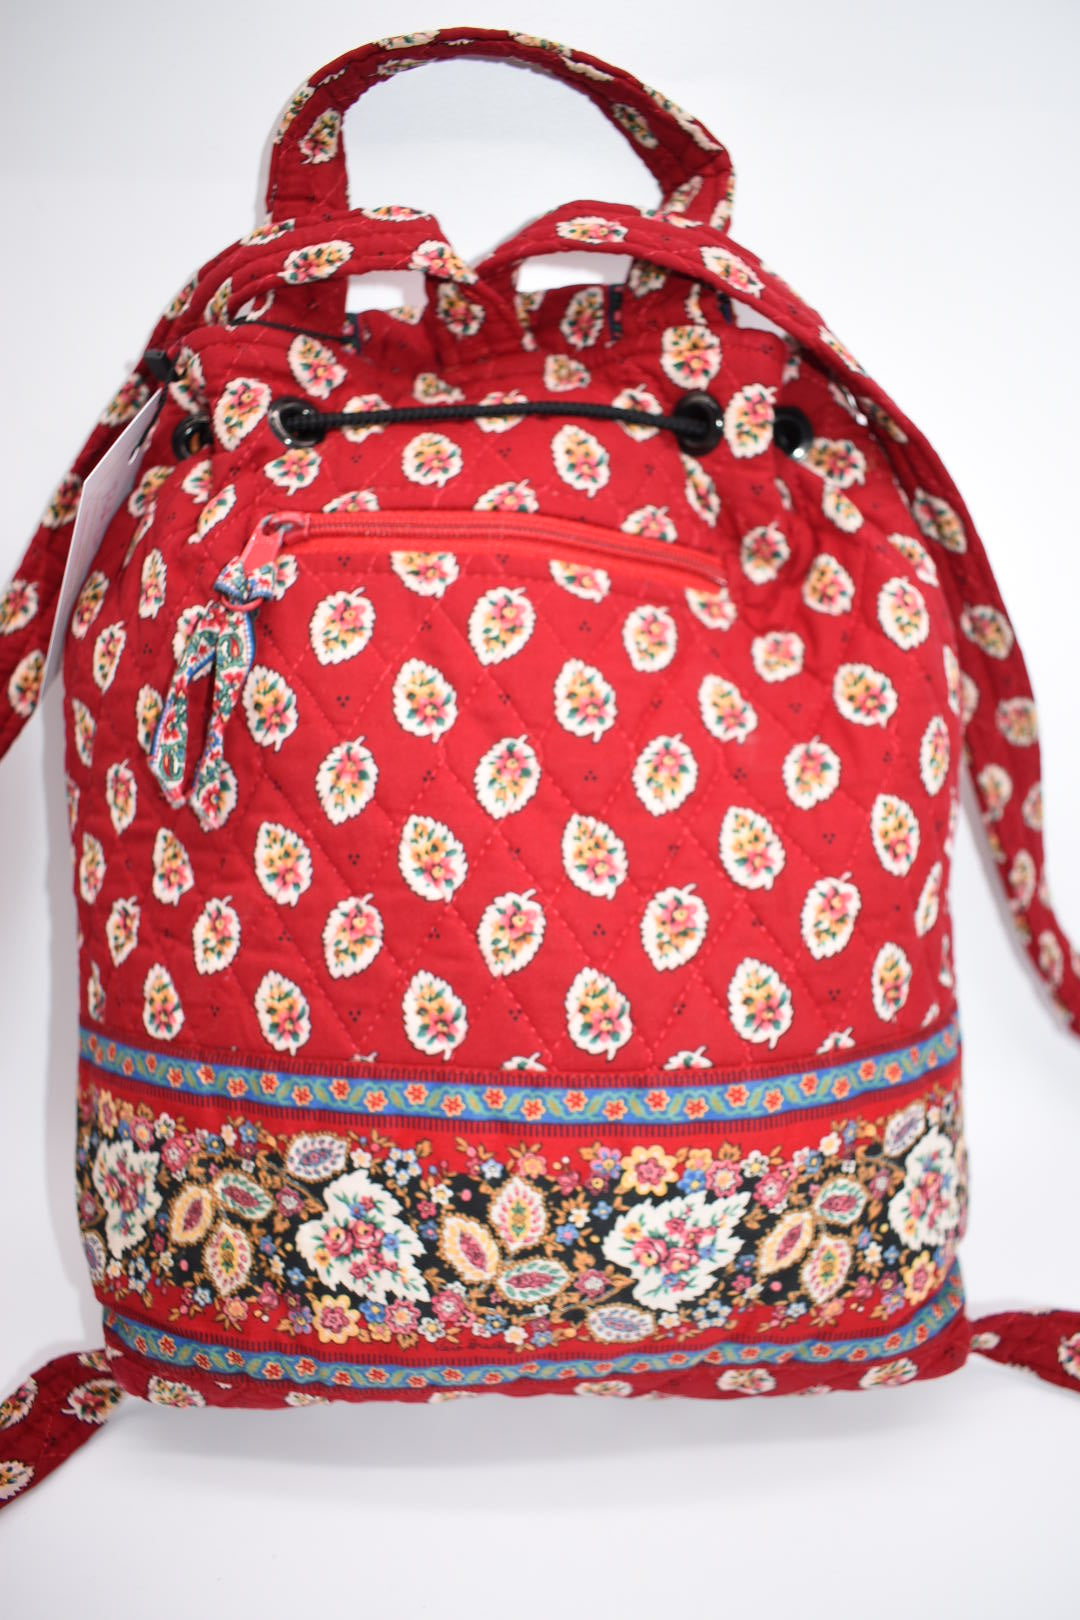 Vera Bradley "Mimi" Backpack in "Red Leaf" Pattern